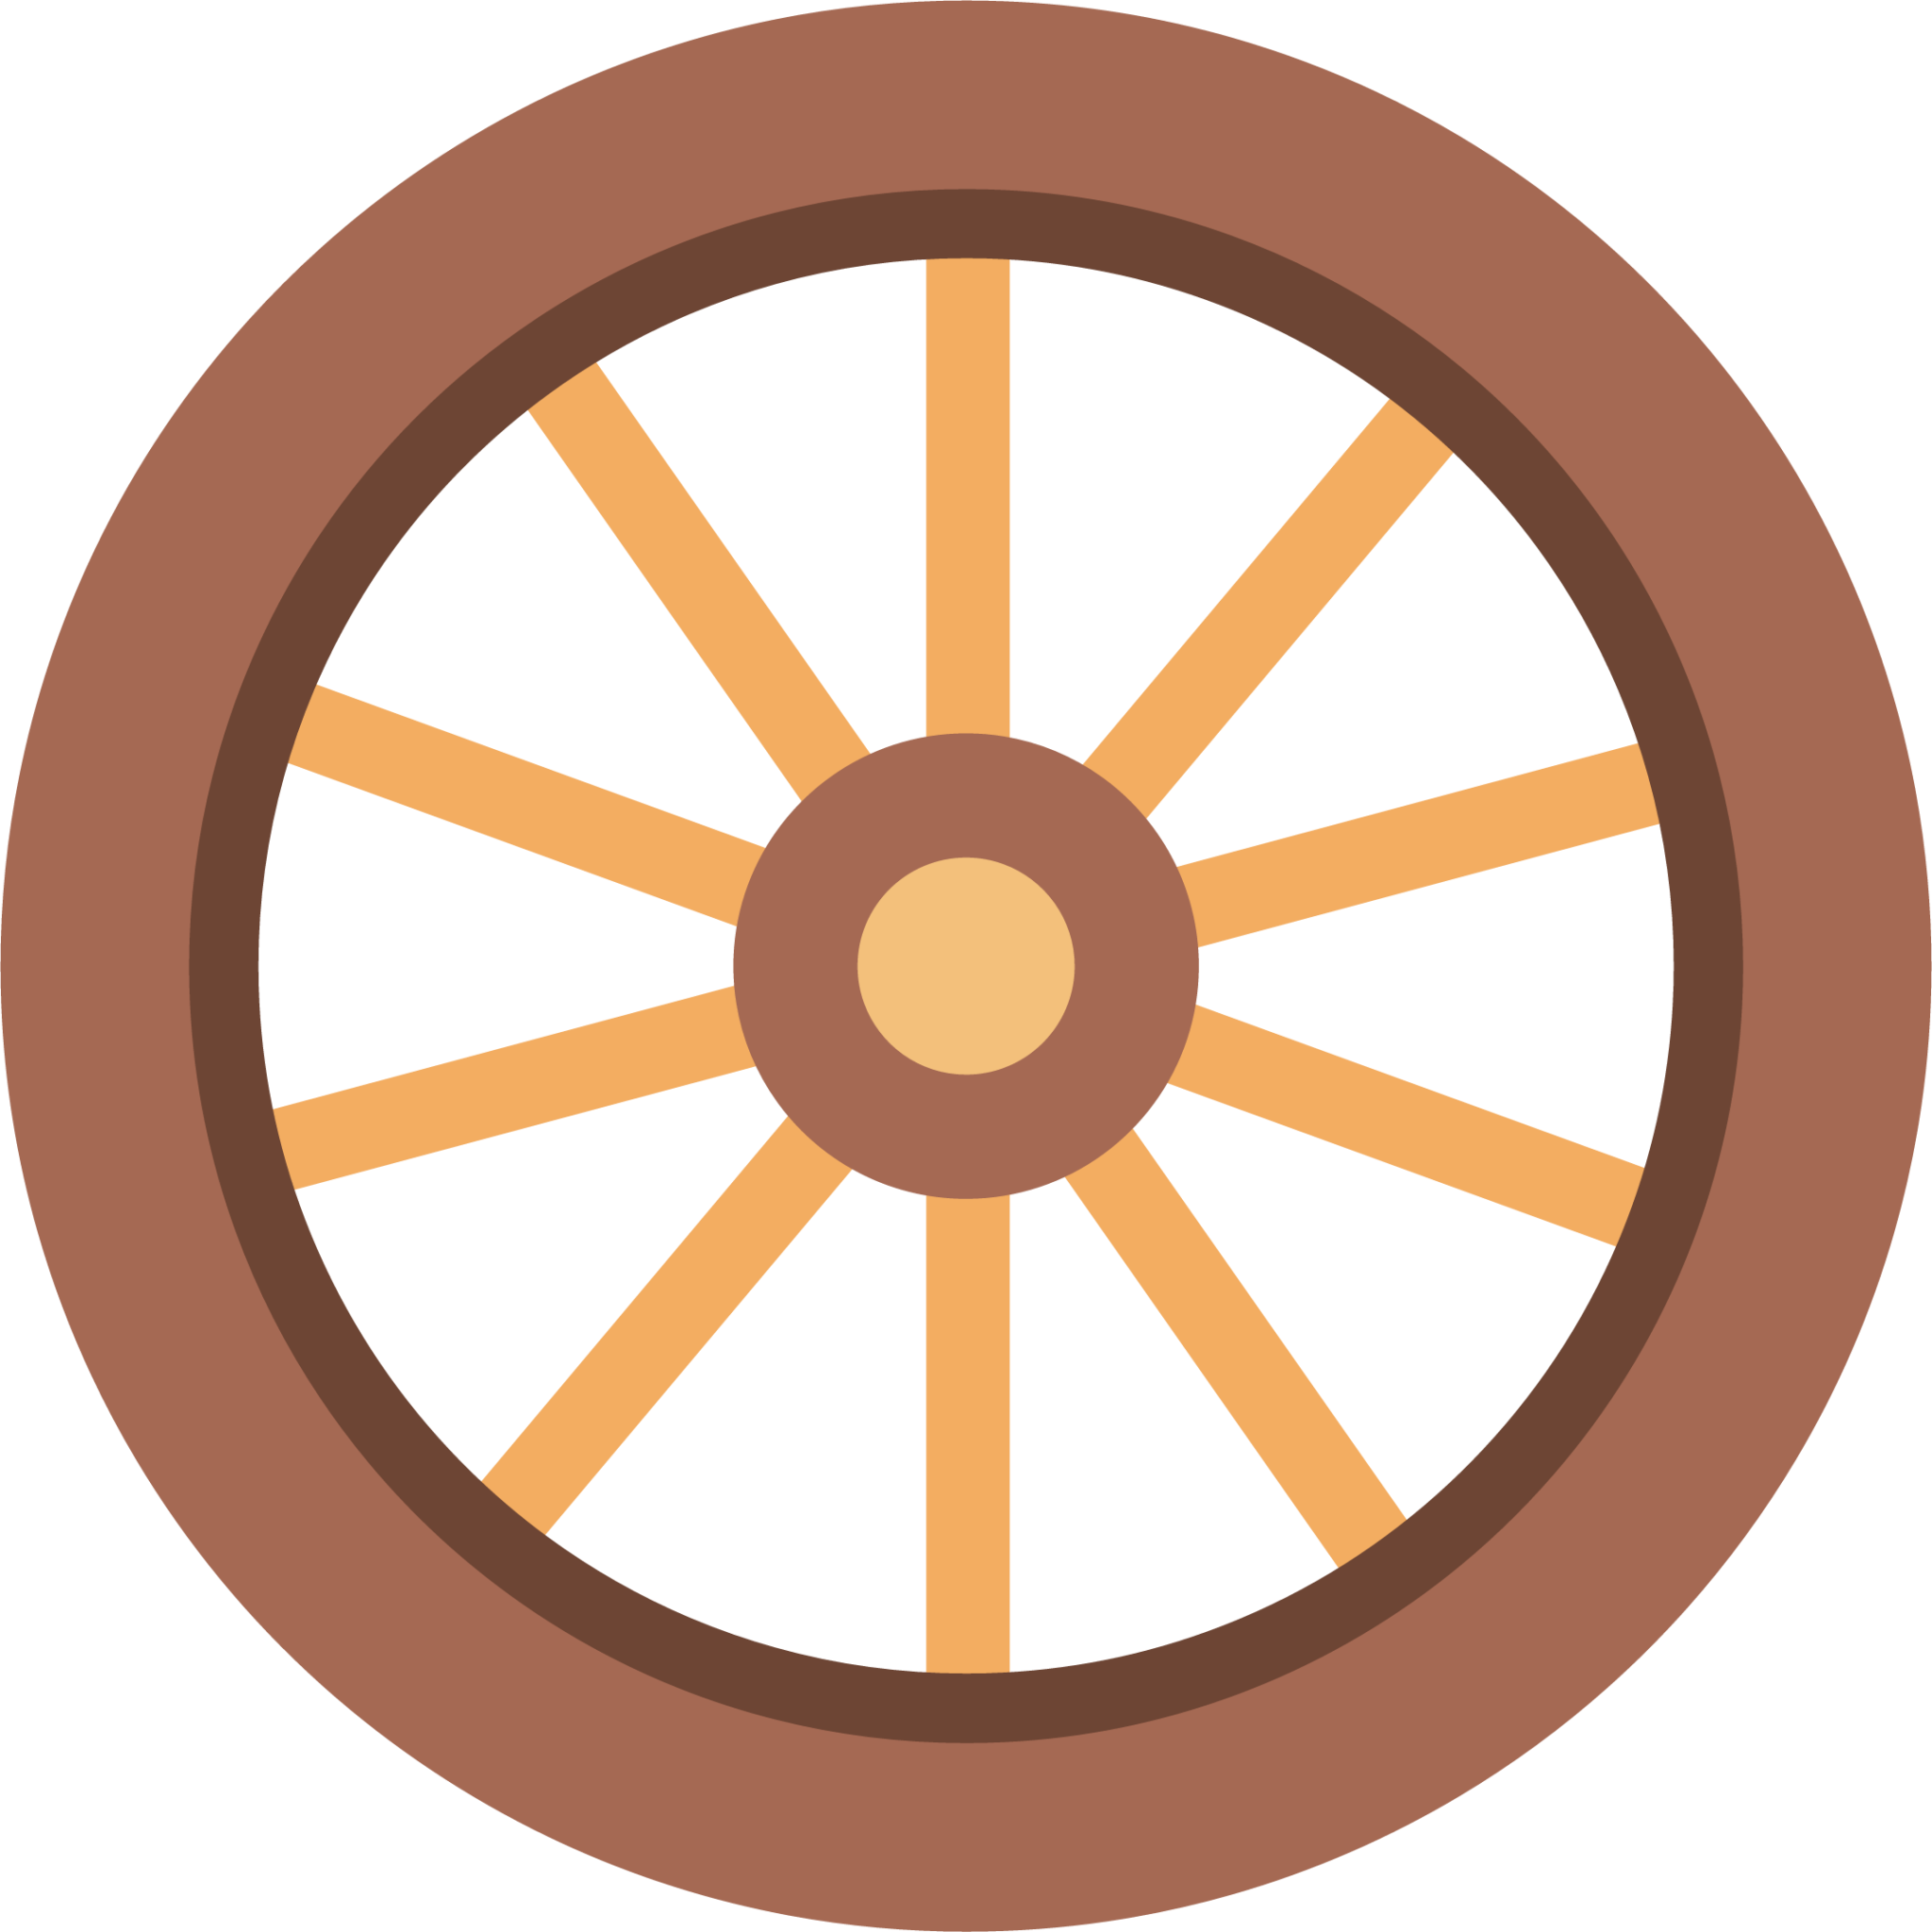 wheel emoji